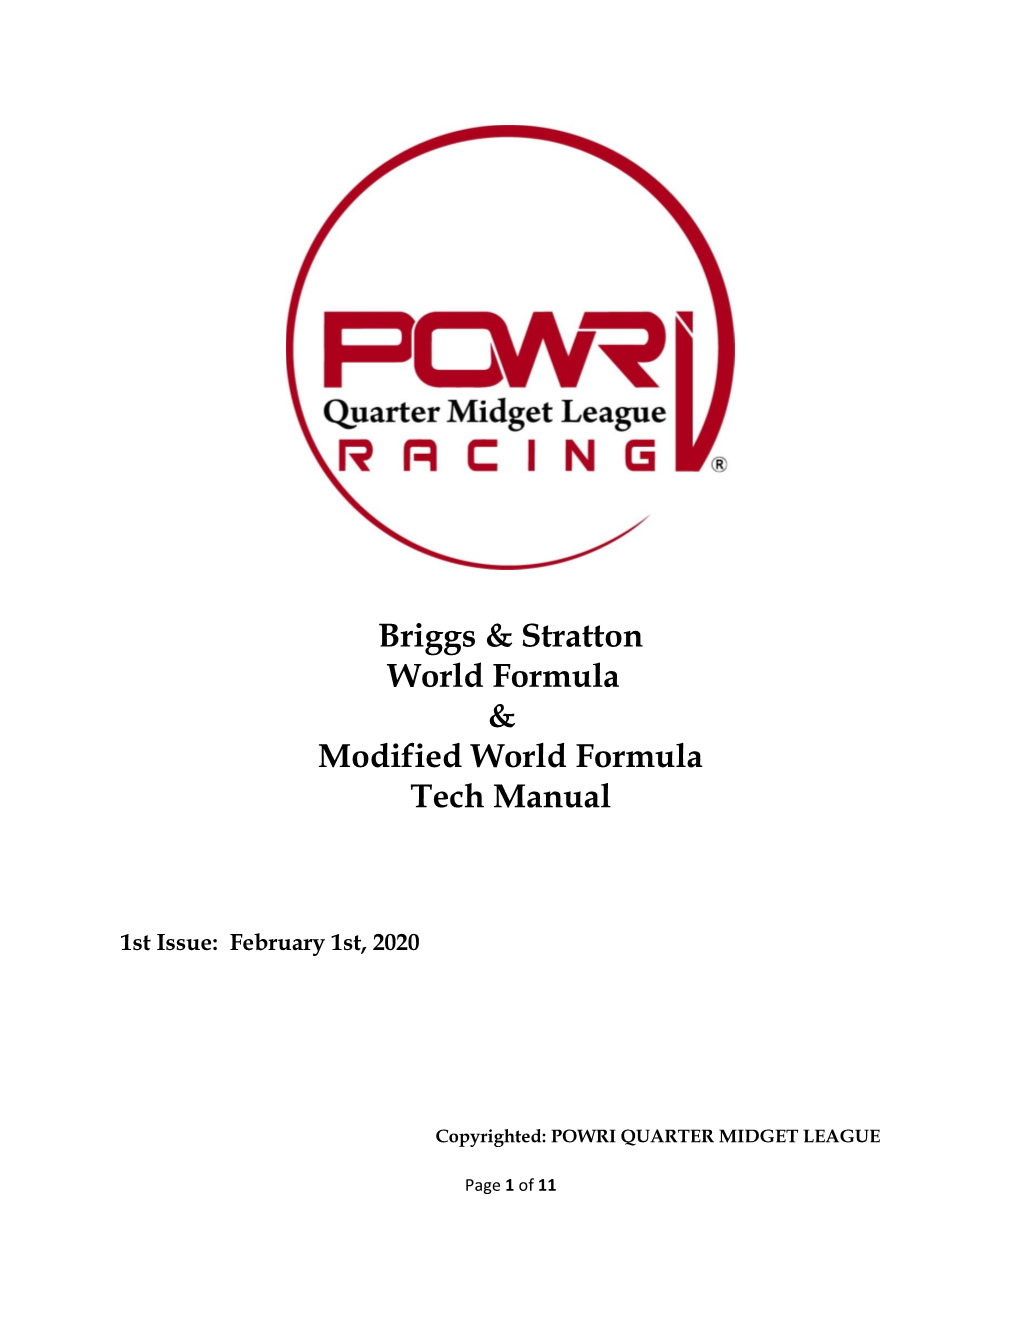 Briggs & Stratton World Formula Tech Manual